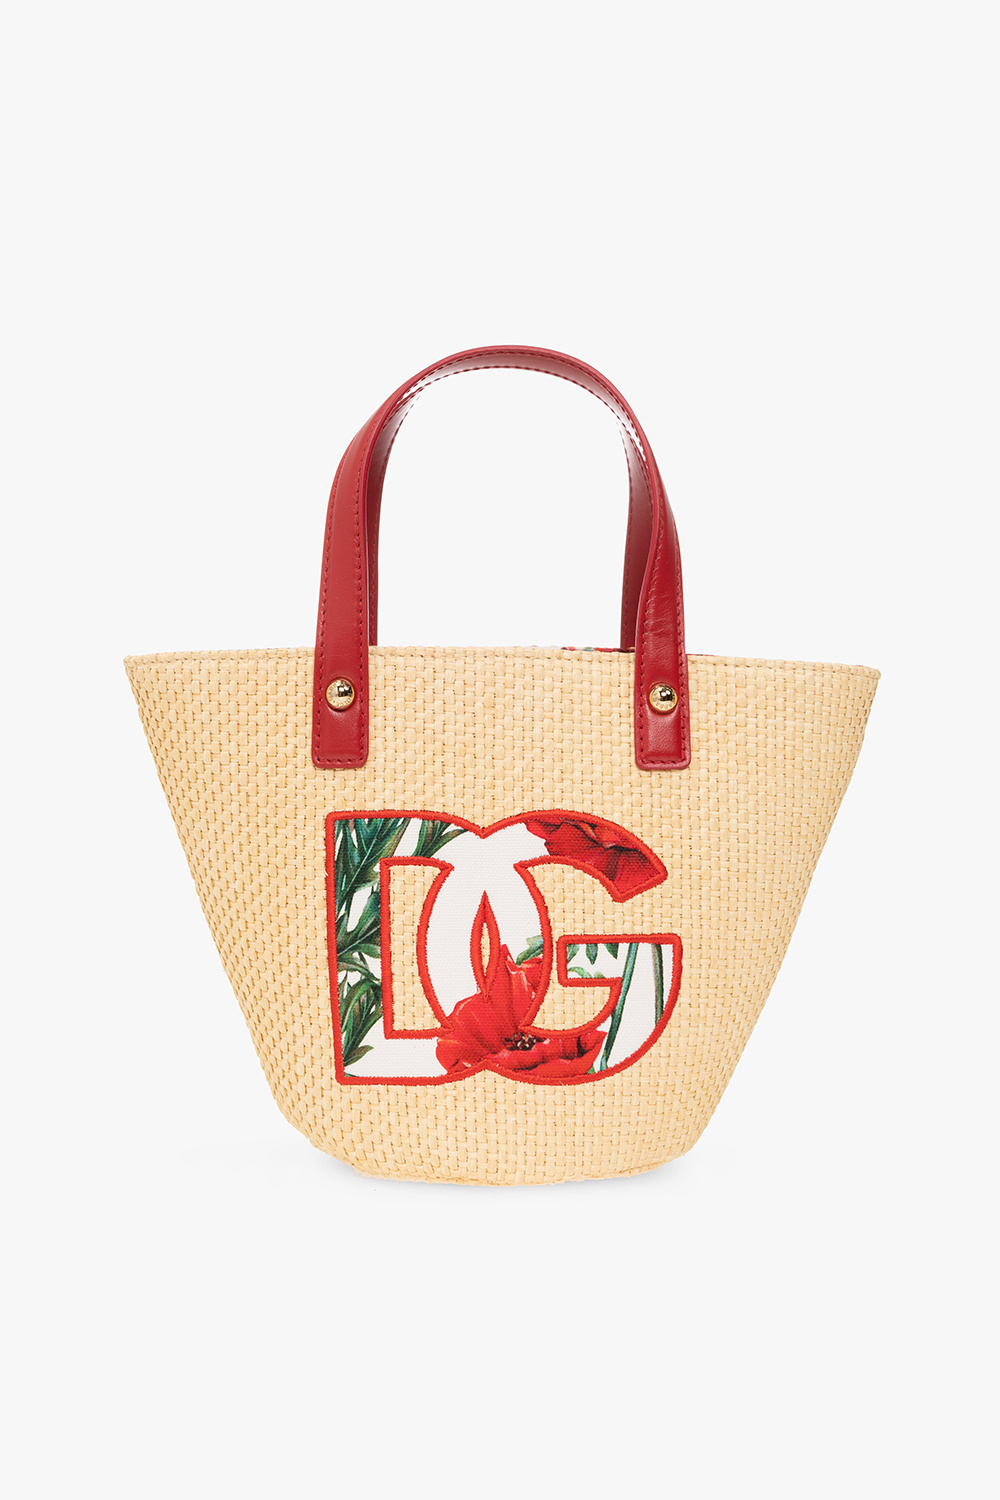 Dolce & Gabbana Beatrice Printed Leather Bag Shopper bag